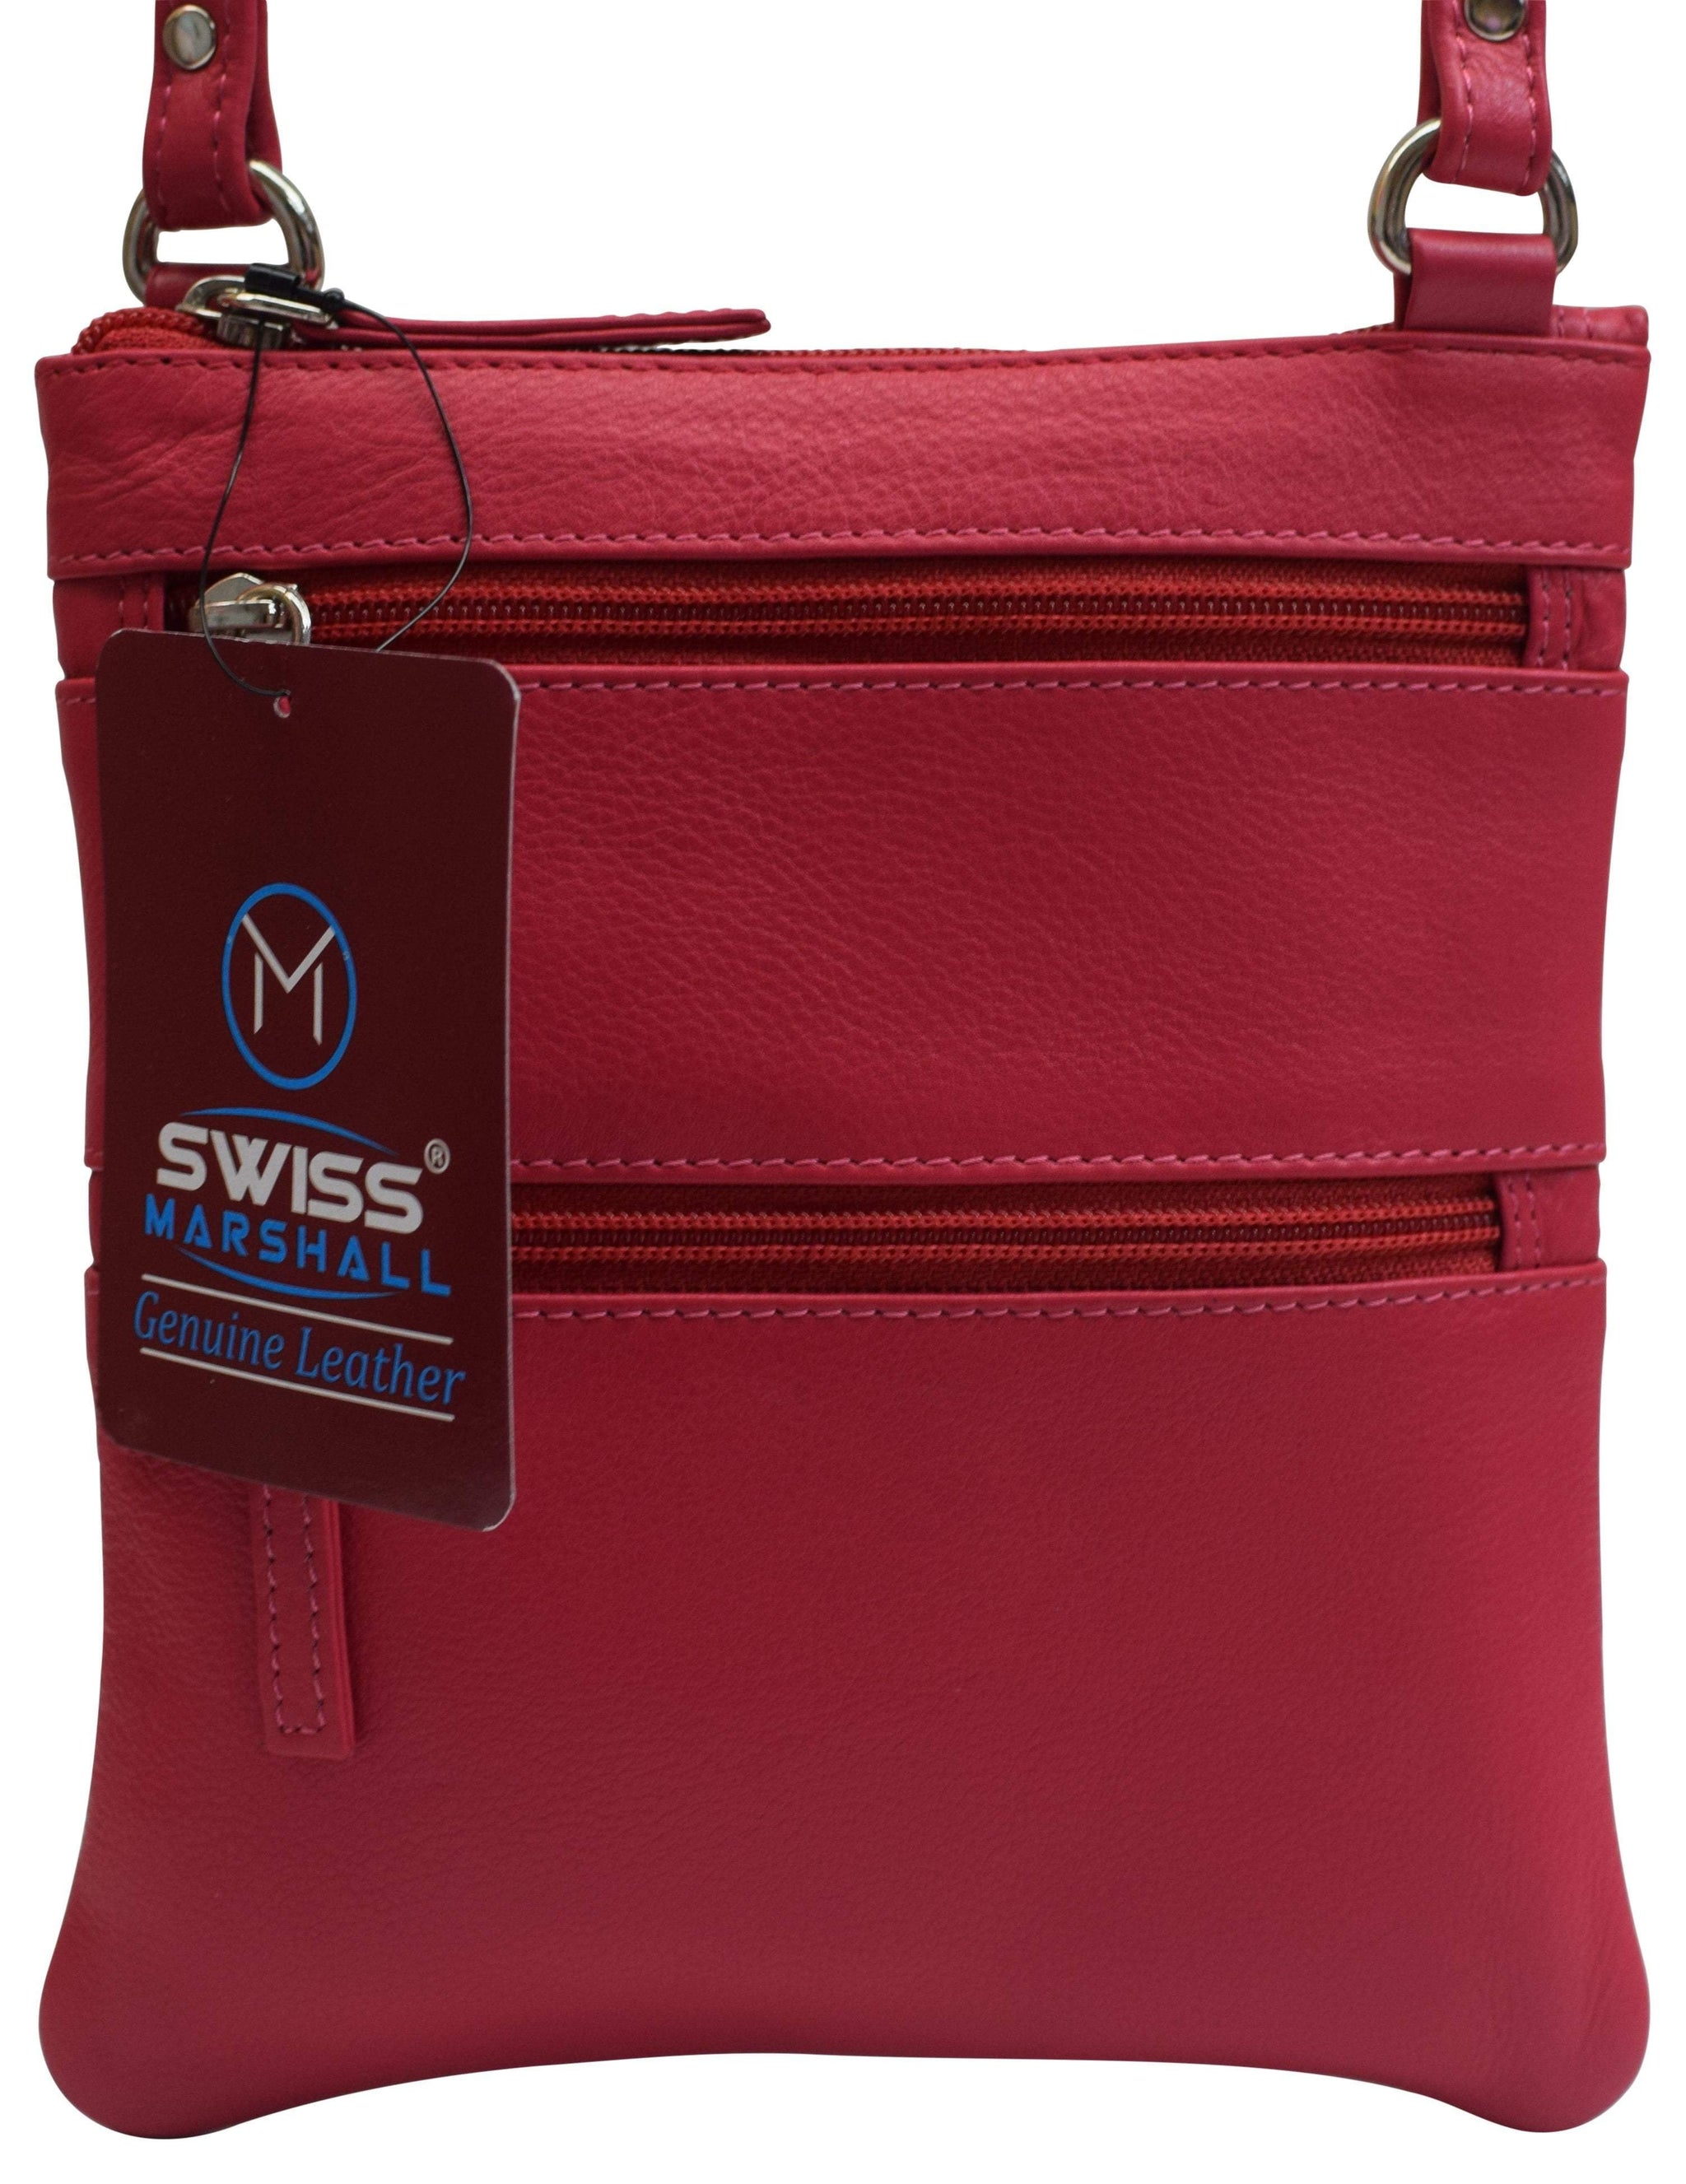 Stylish brown leather handbag with flower designs on Craiyon